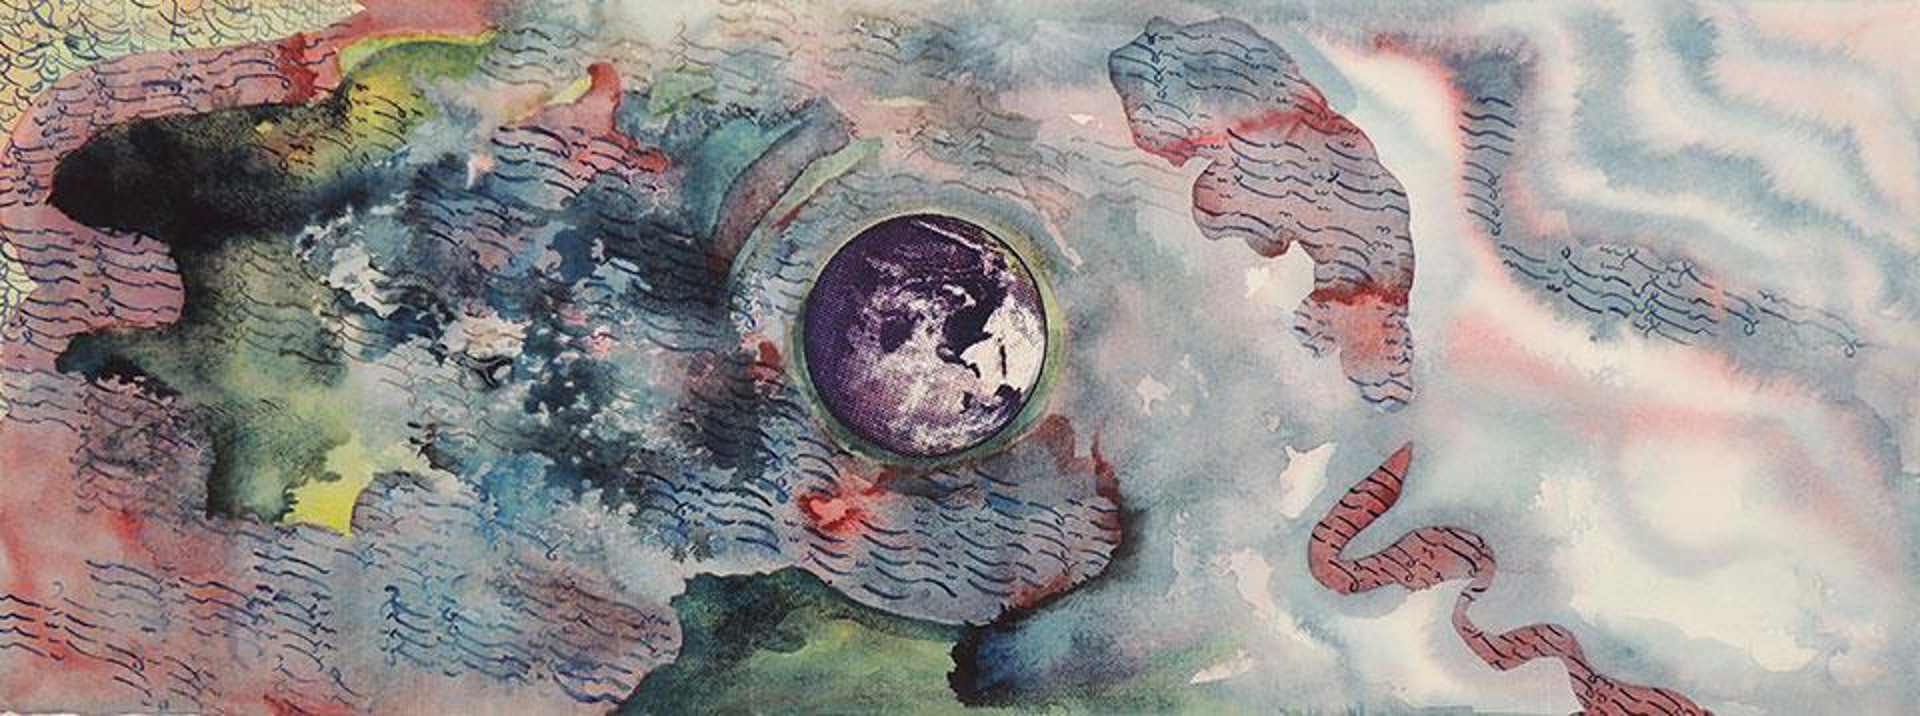 The Realm of Earth I by Pantea Karimi